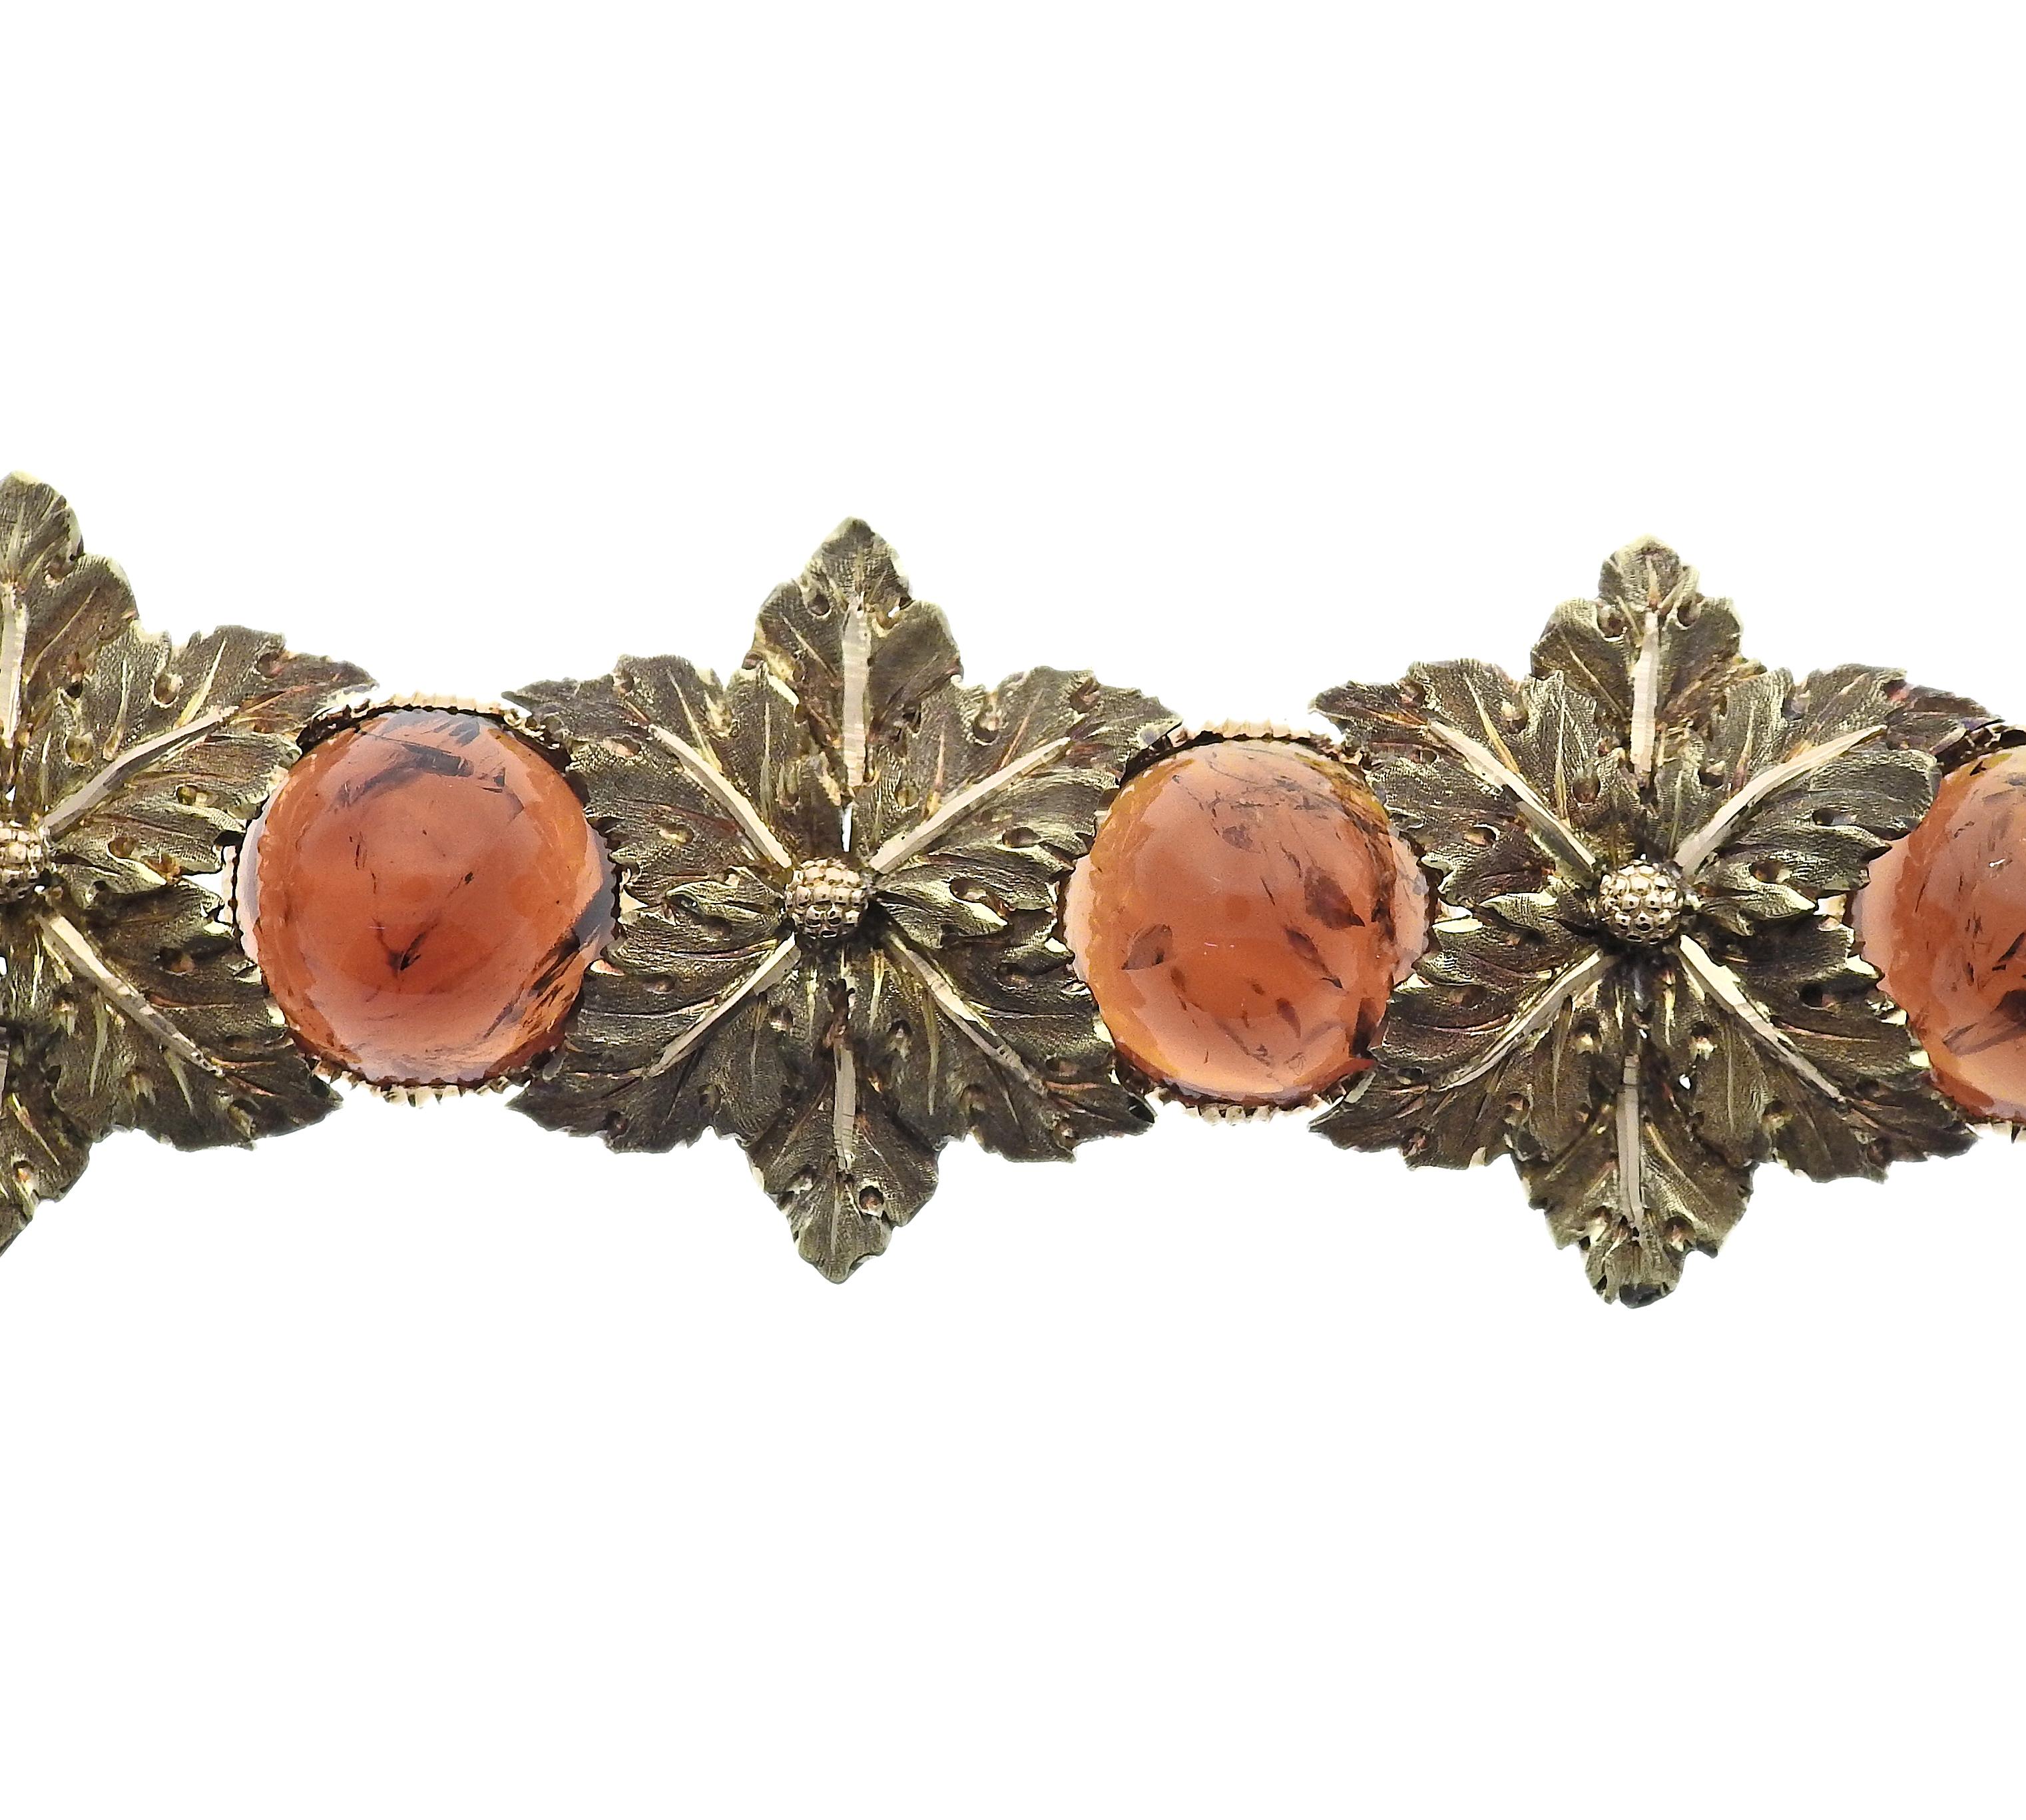 18k yellow gold leaf motif bracelet by Buccellati set with amber. Bracelet measures 7